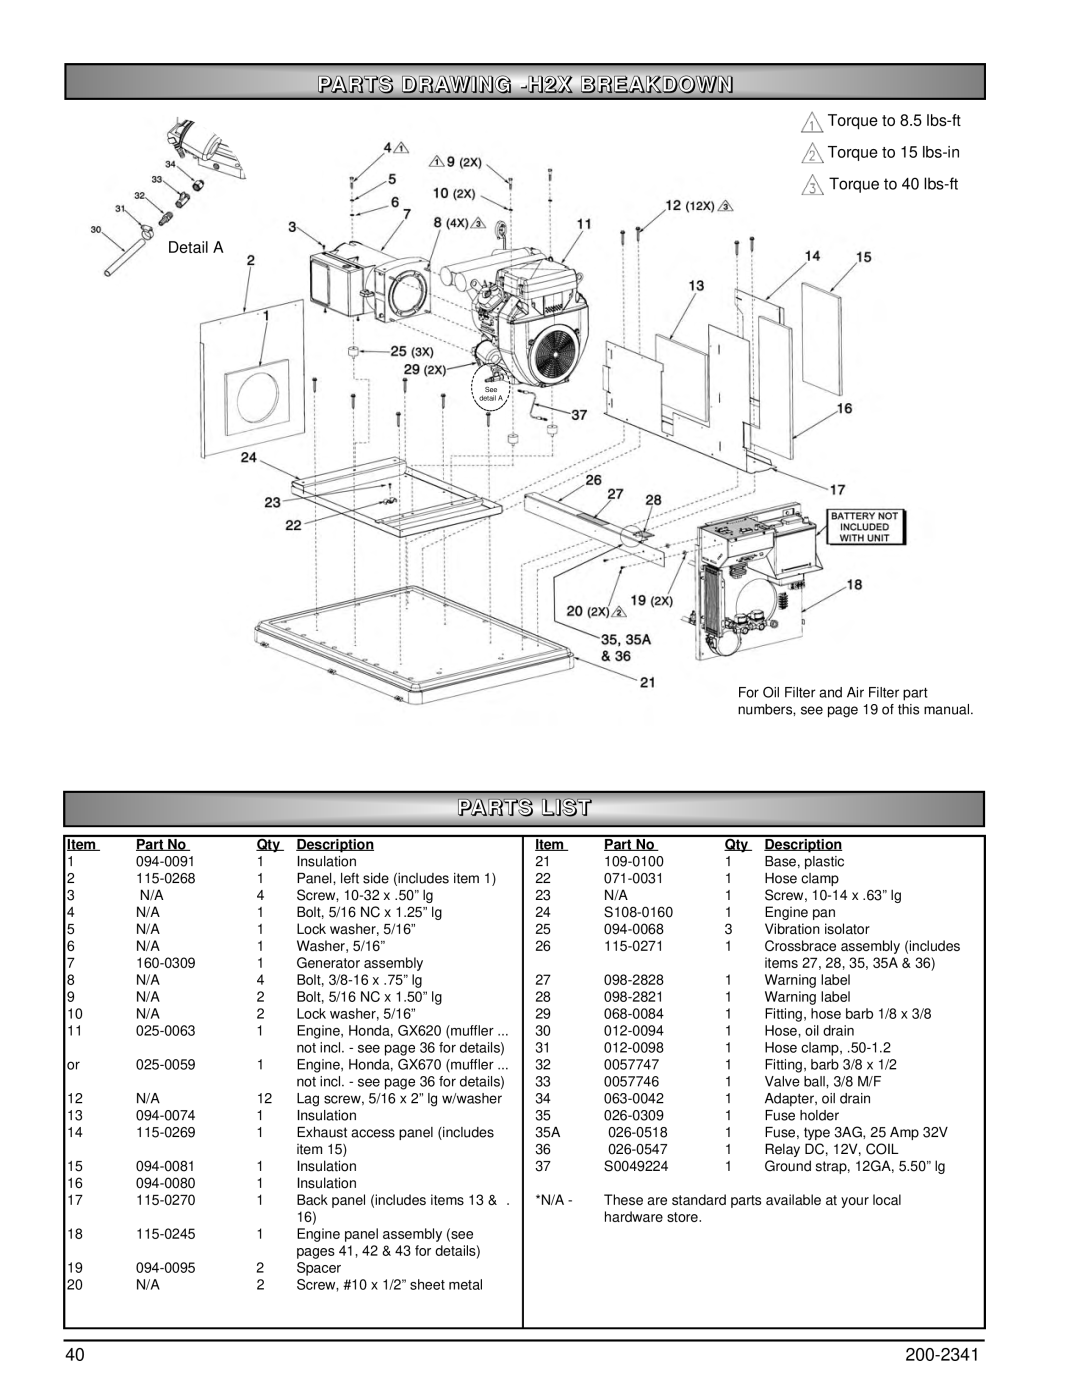 Powermate PM400911 owner manual PARTS DRAWING -H2XBREAKDOWN, Parts List, Description 